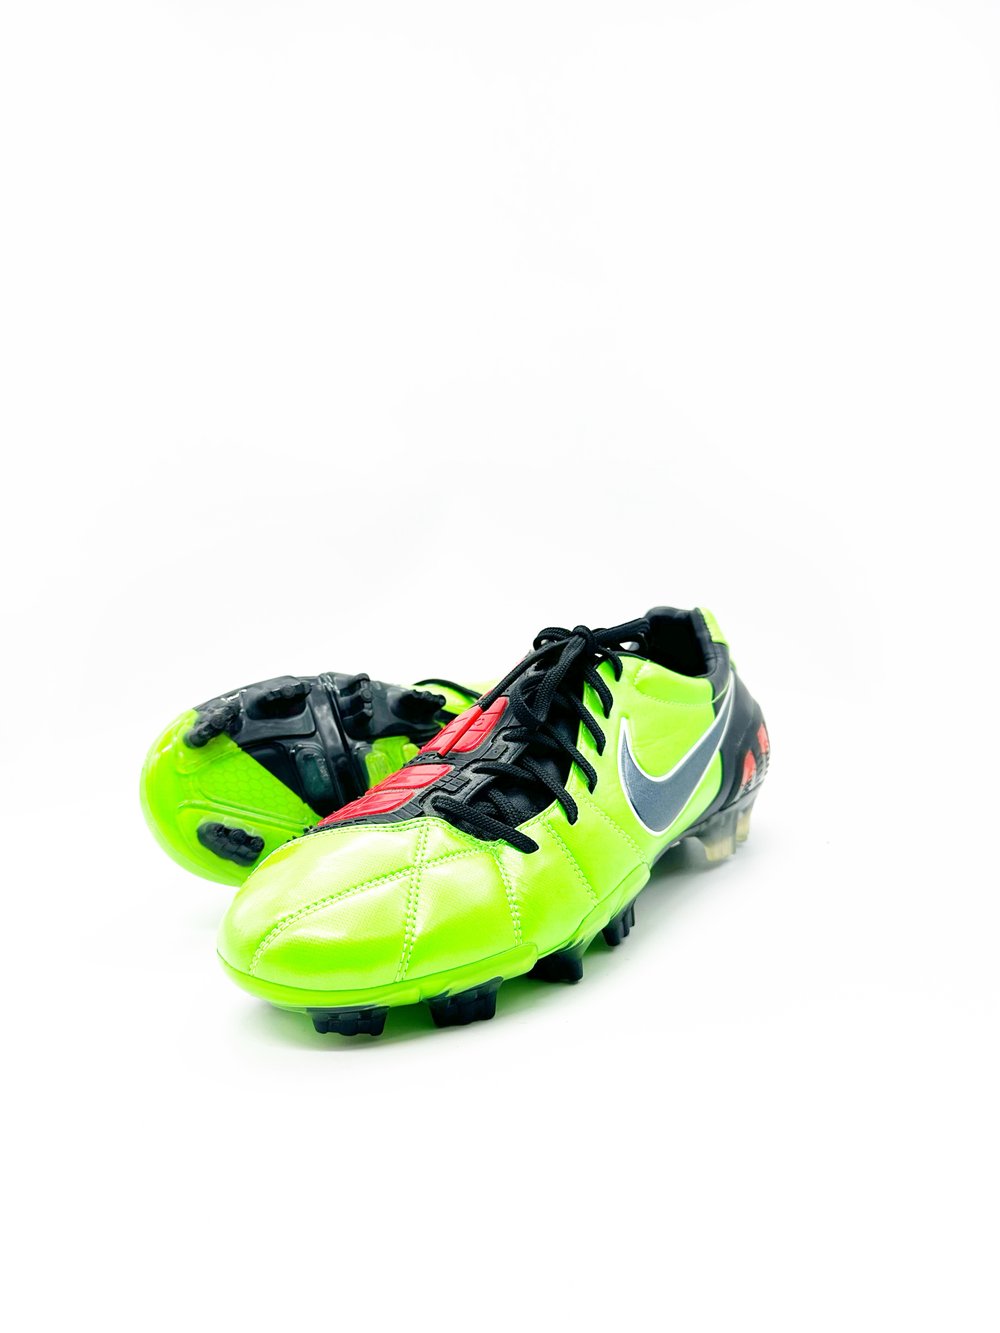 Image of Nike Total90 Laser GREEN FG